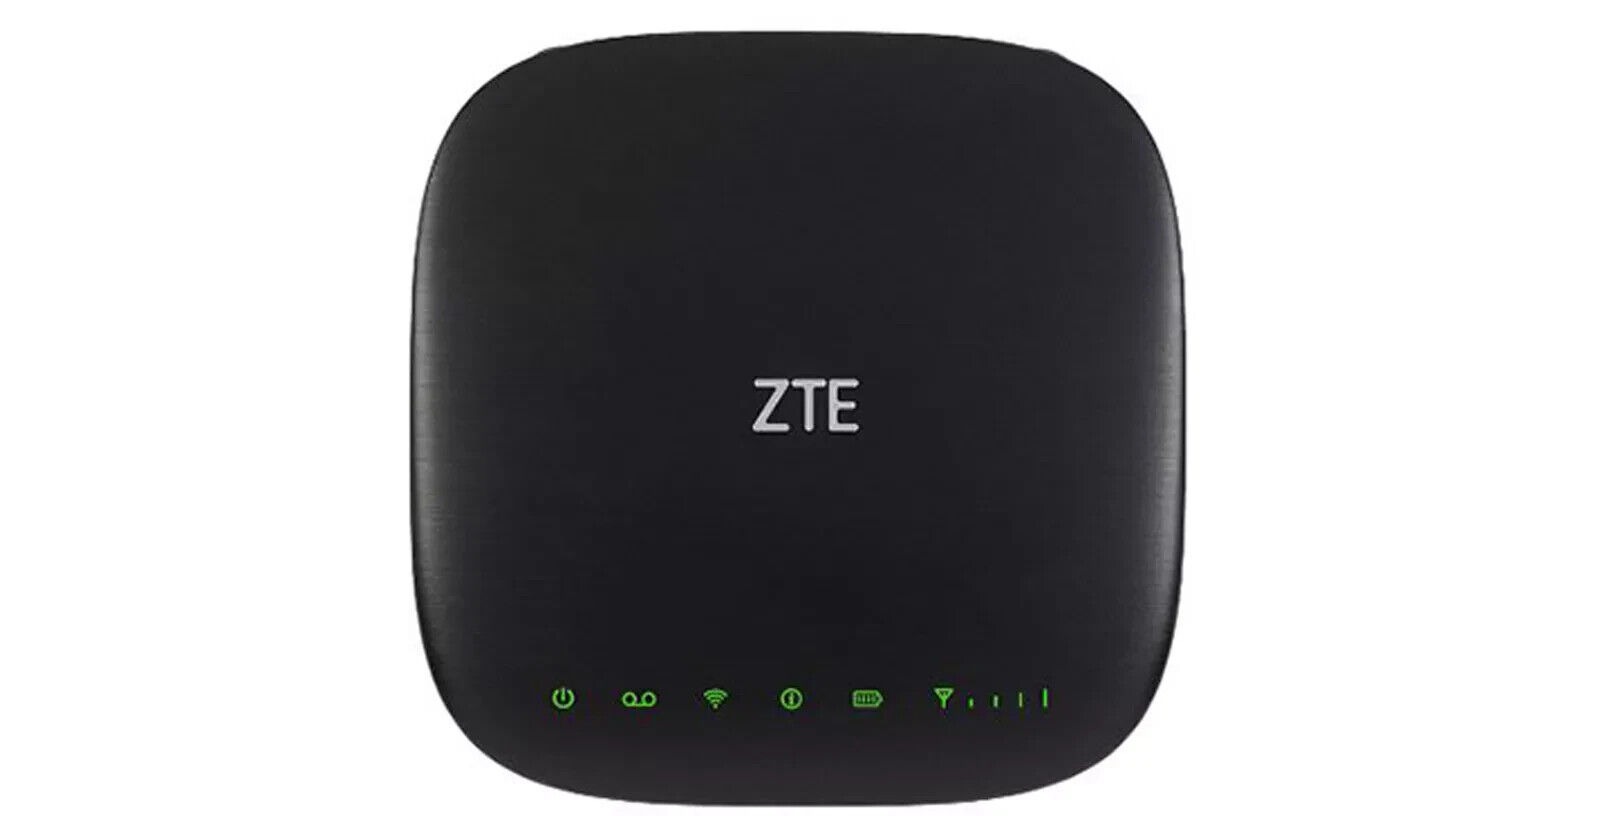 ZTE MF279T Home Wireless Smart Hub Router GSM Unlocked Black